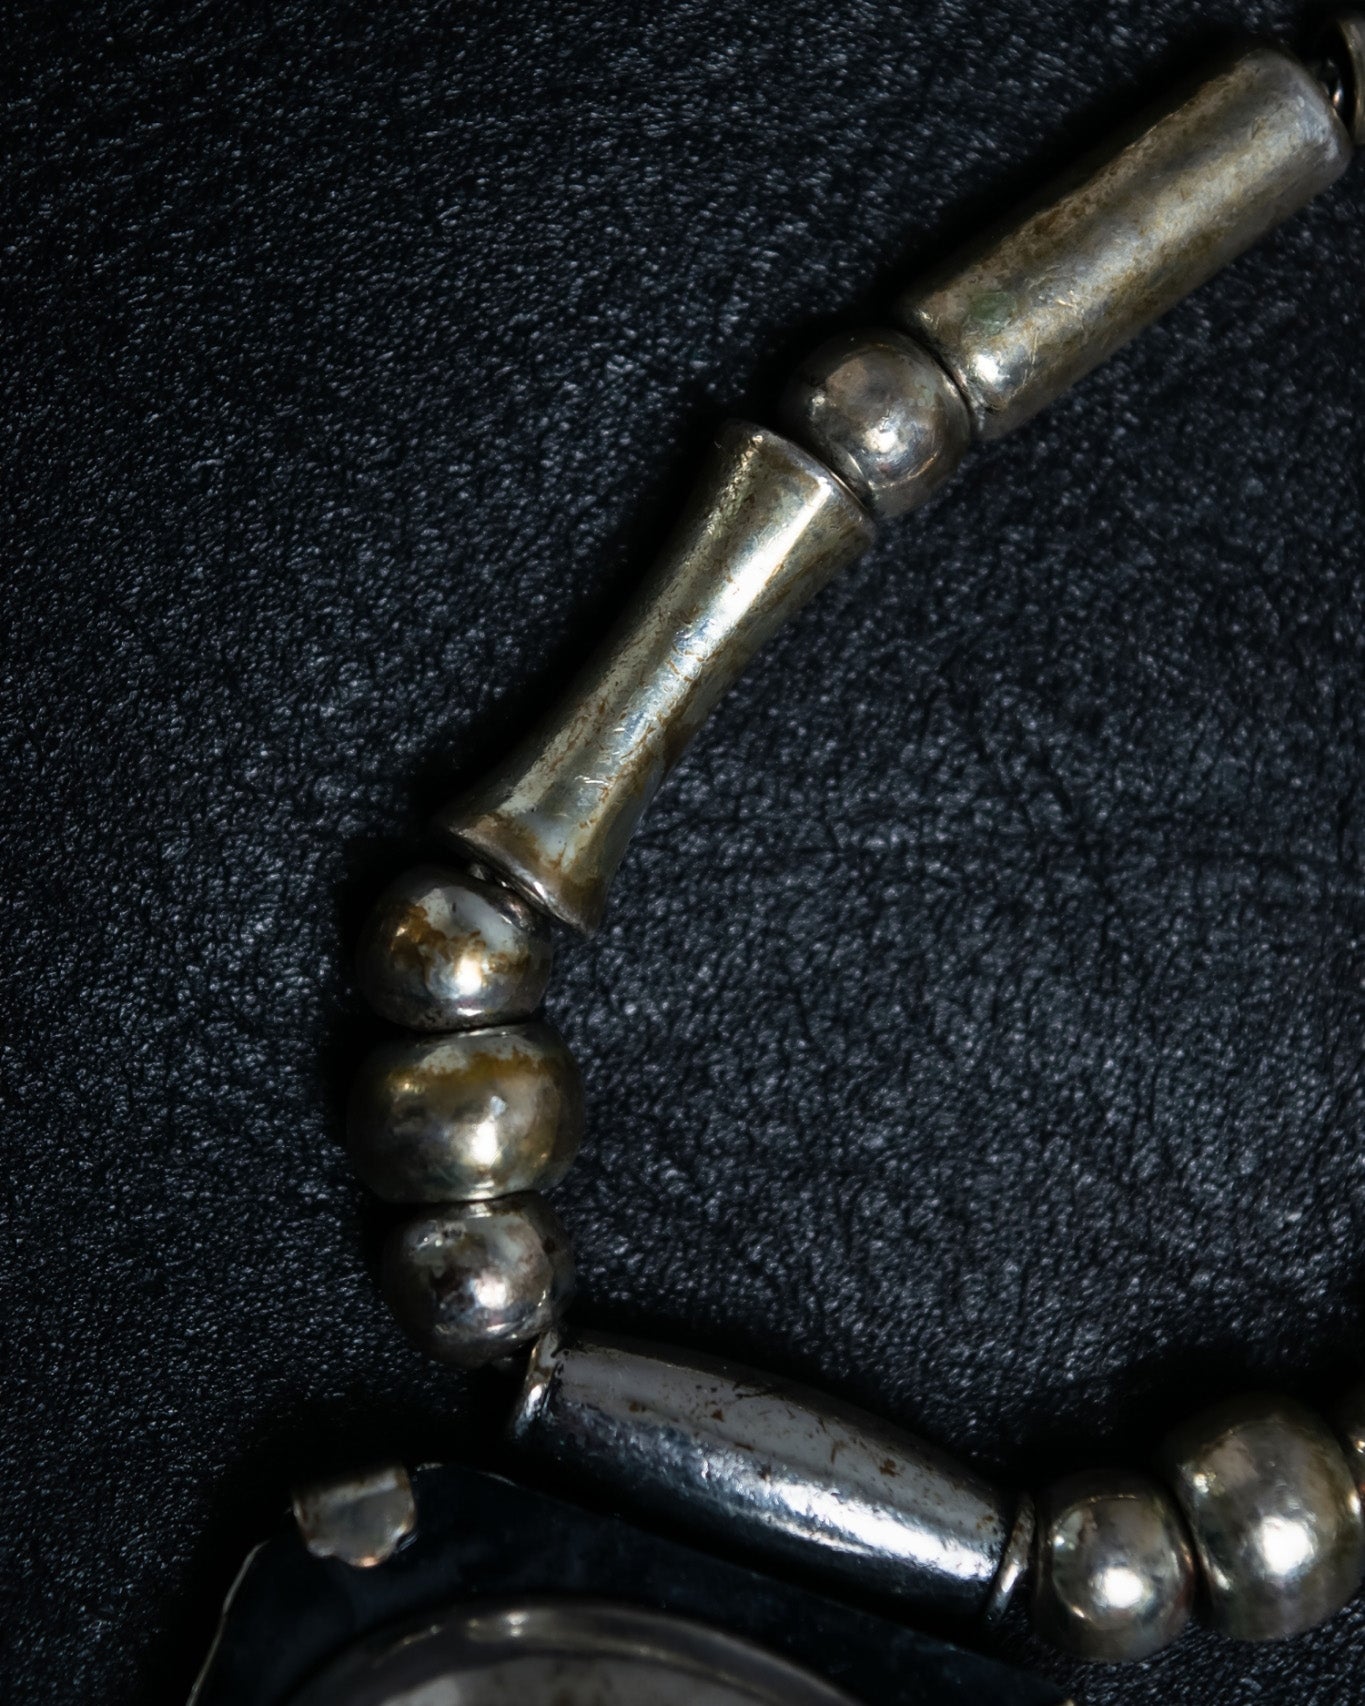 Vintage Iron Nugget Necklace